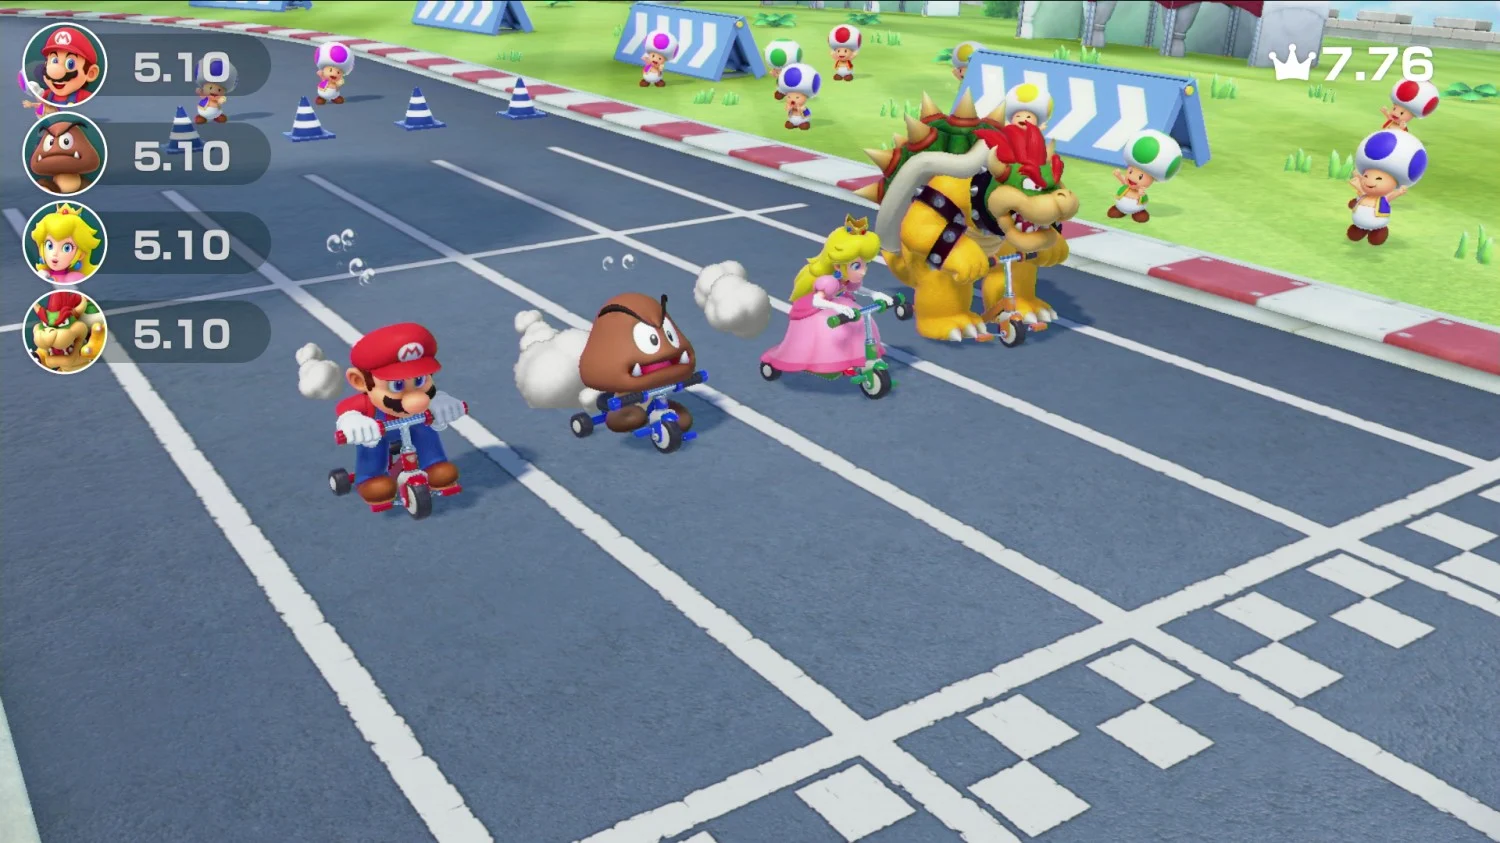 Jogo Super Mario Party Nintendo Switch no Paraguai - Atacado Games